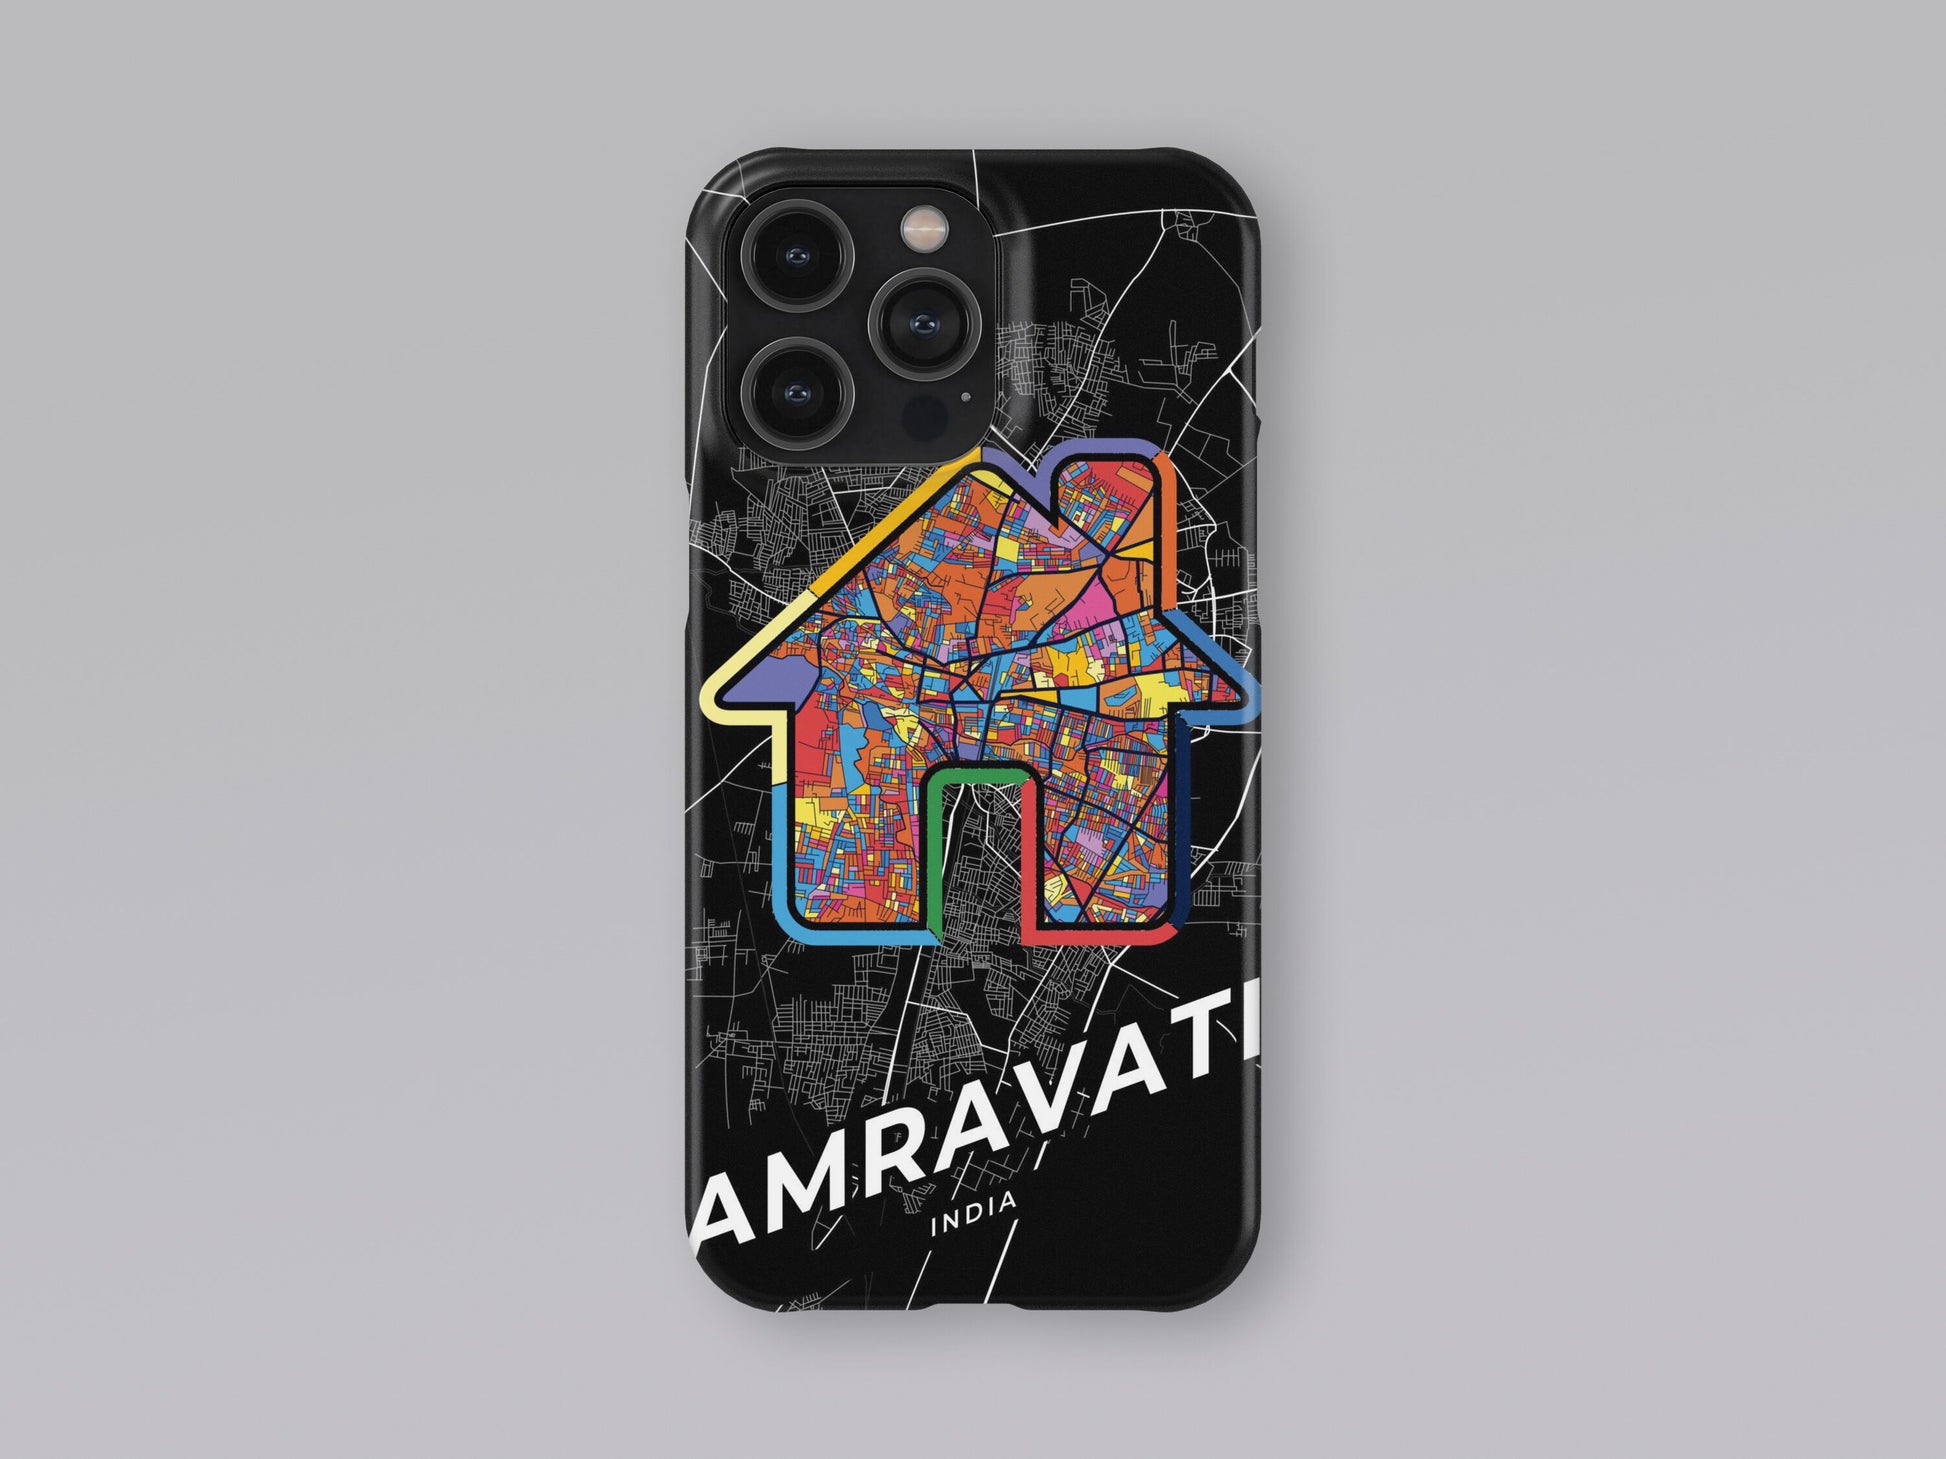 Amravati India slim phone case with colorful icon. Birthday, wedding or housewarming gift. Couple match cases. 3